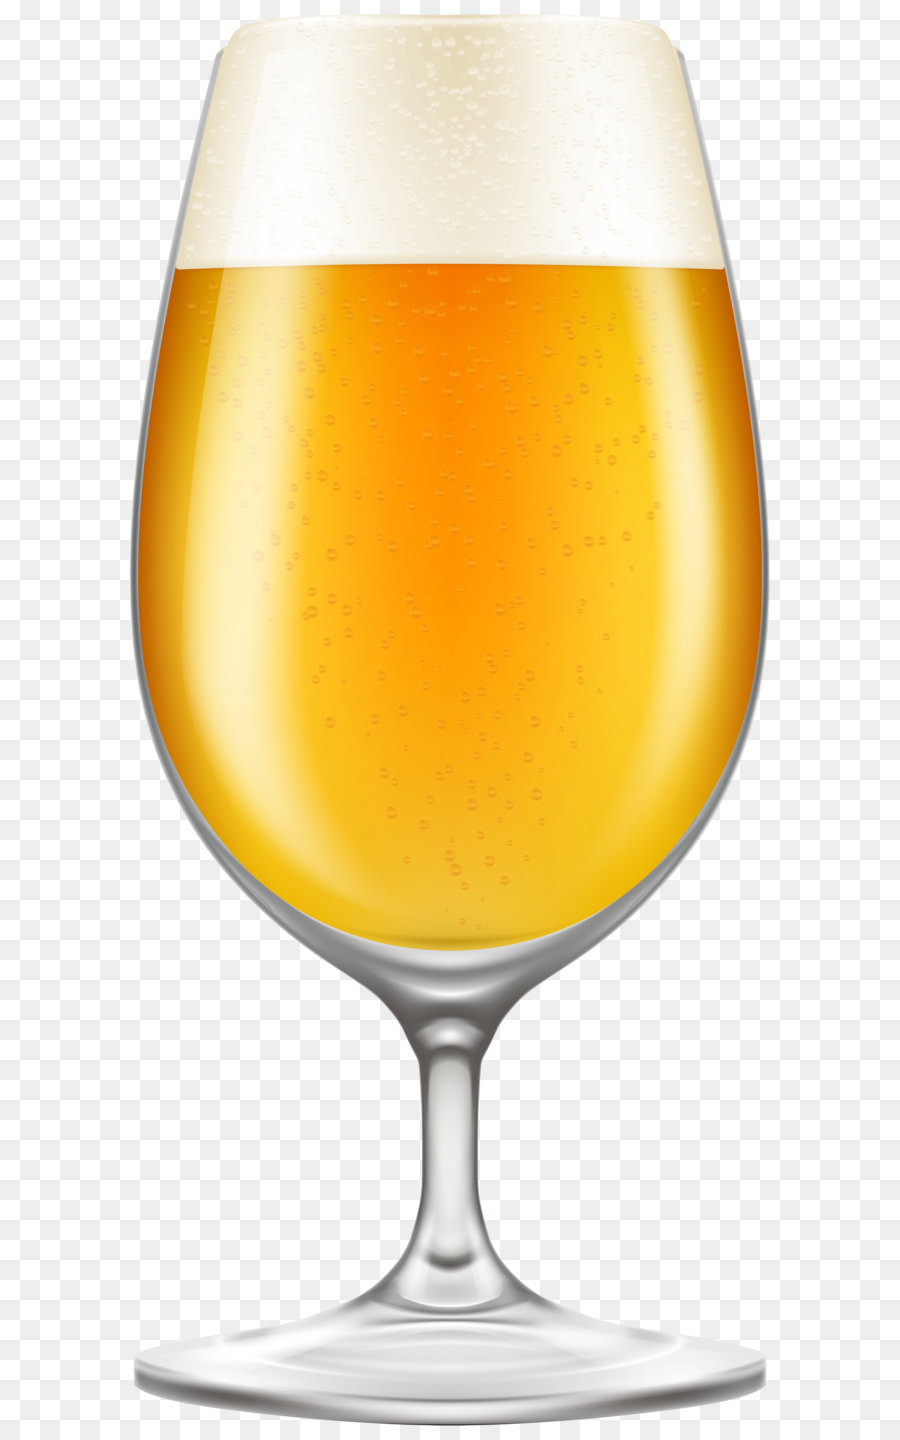 Beer Cocktail Wine glass Clip art - Beer Glass Transparent PNG Clip Art Image png download - 3624*8000 - Free Transparent Beer png Download.